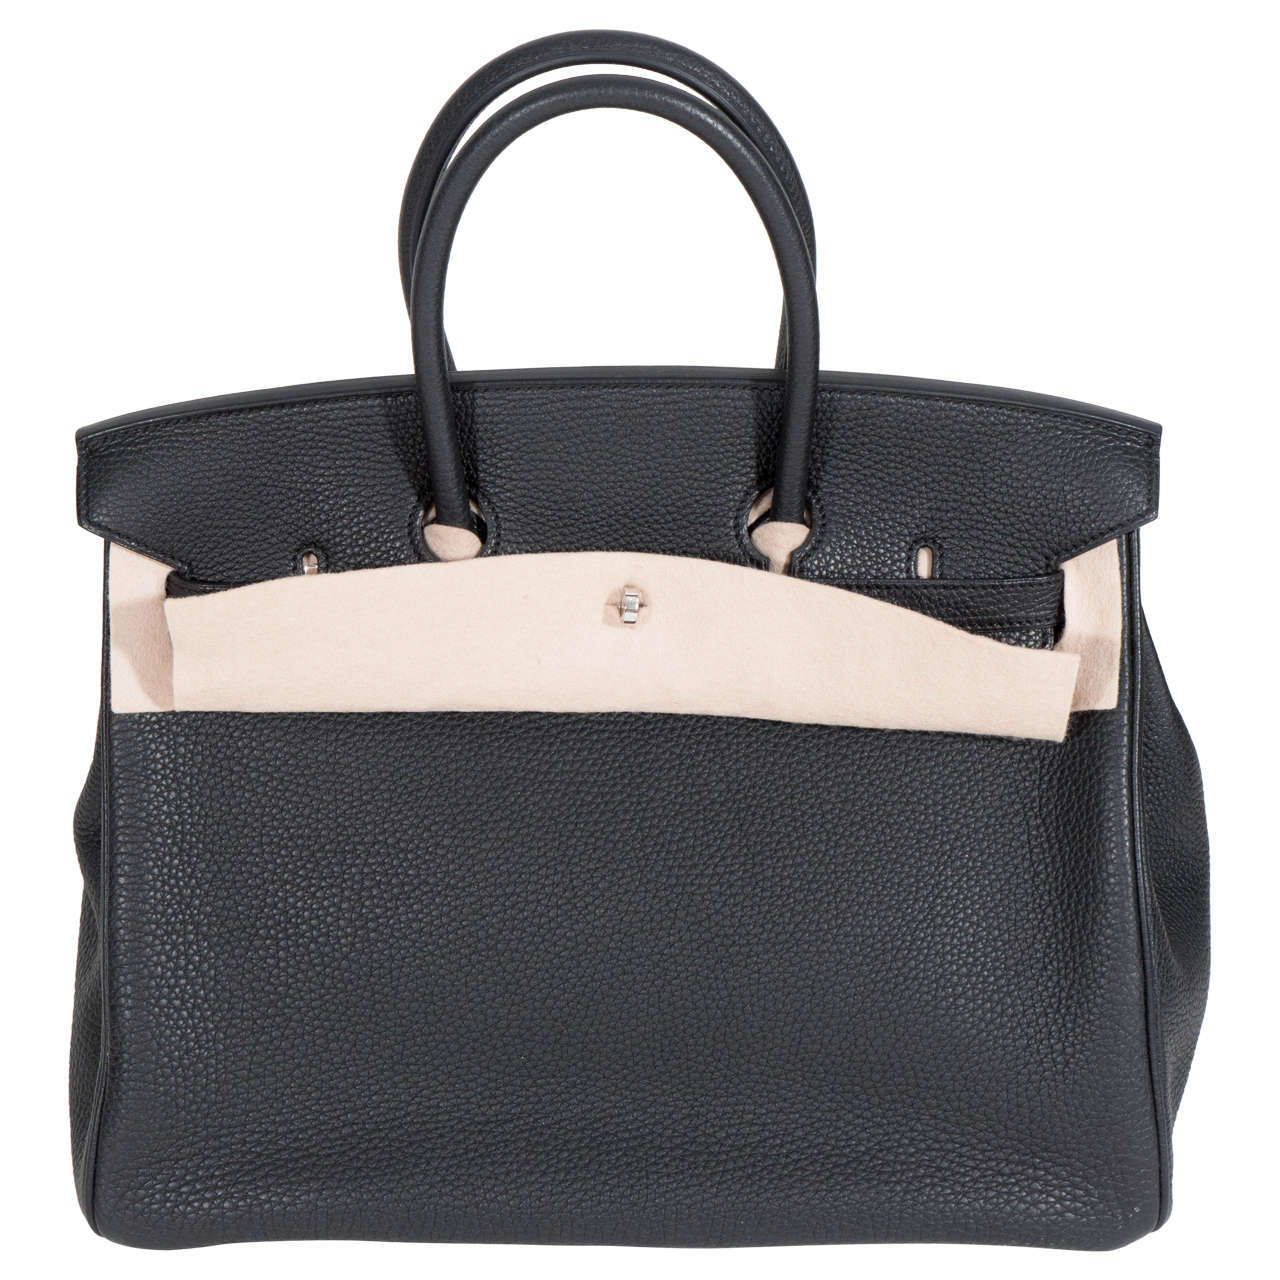 Hermès Birkin Bag in Black Togo Leather with Palladium Hardware, 2009 For Sale